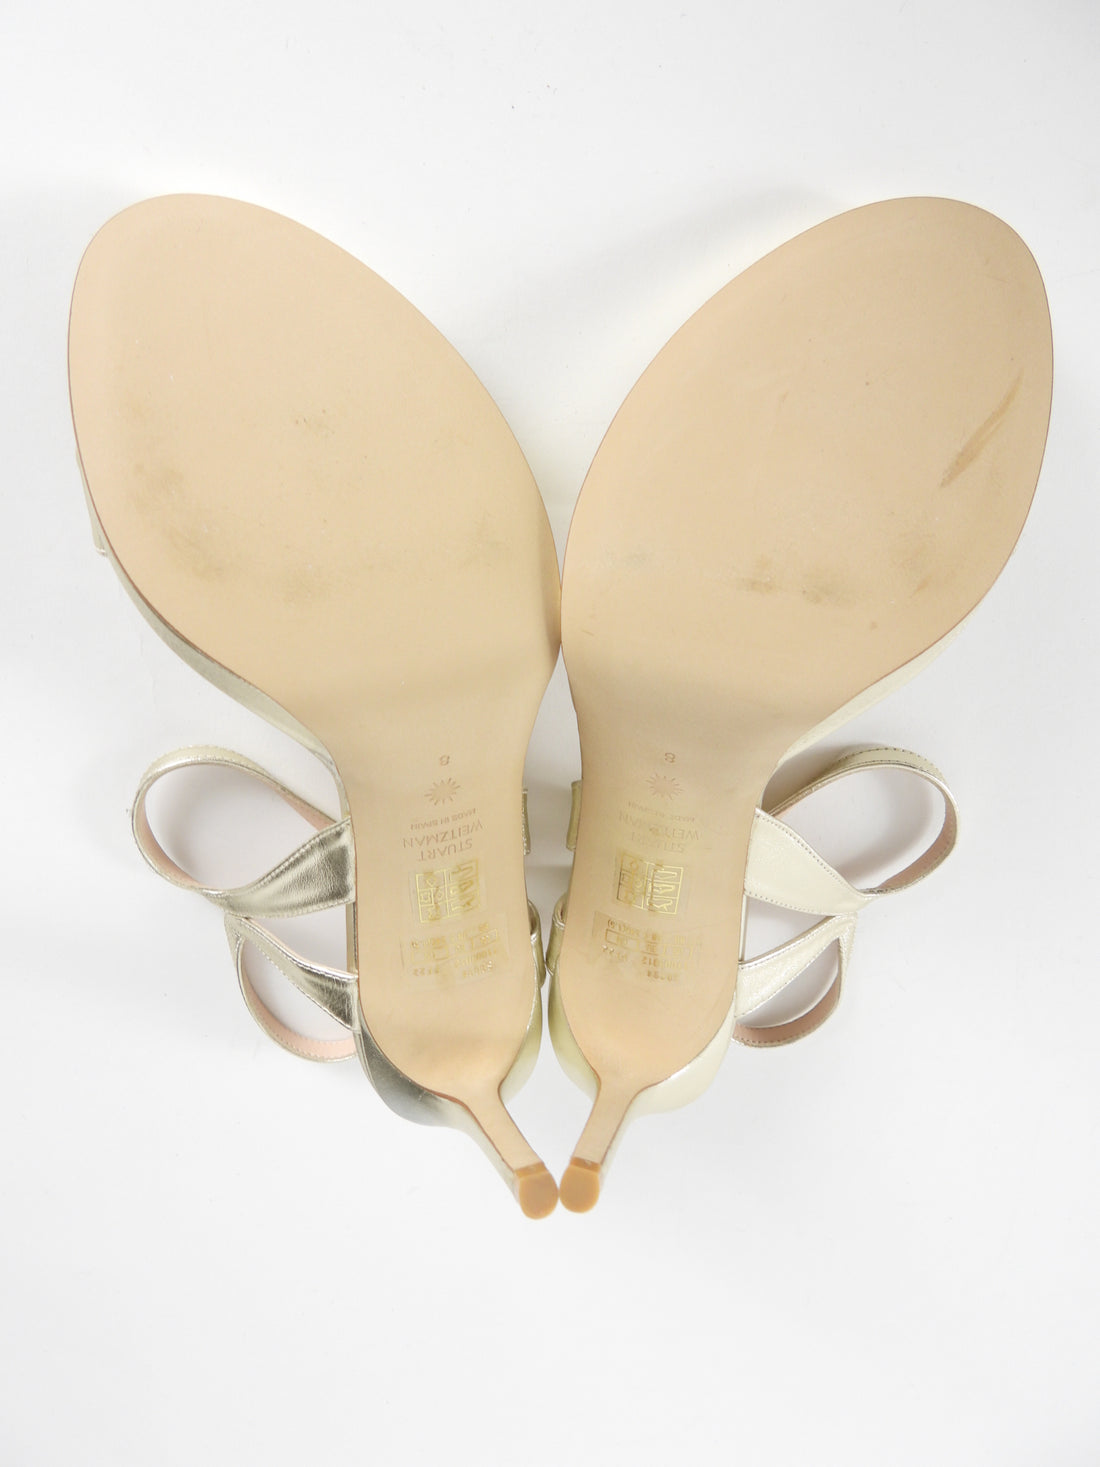 Stuart Weitzman Light Gold Metallic Leather Mariposa 80mm Platform Sandals - 8.5